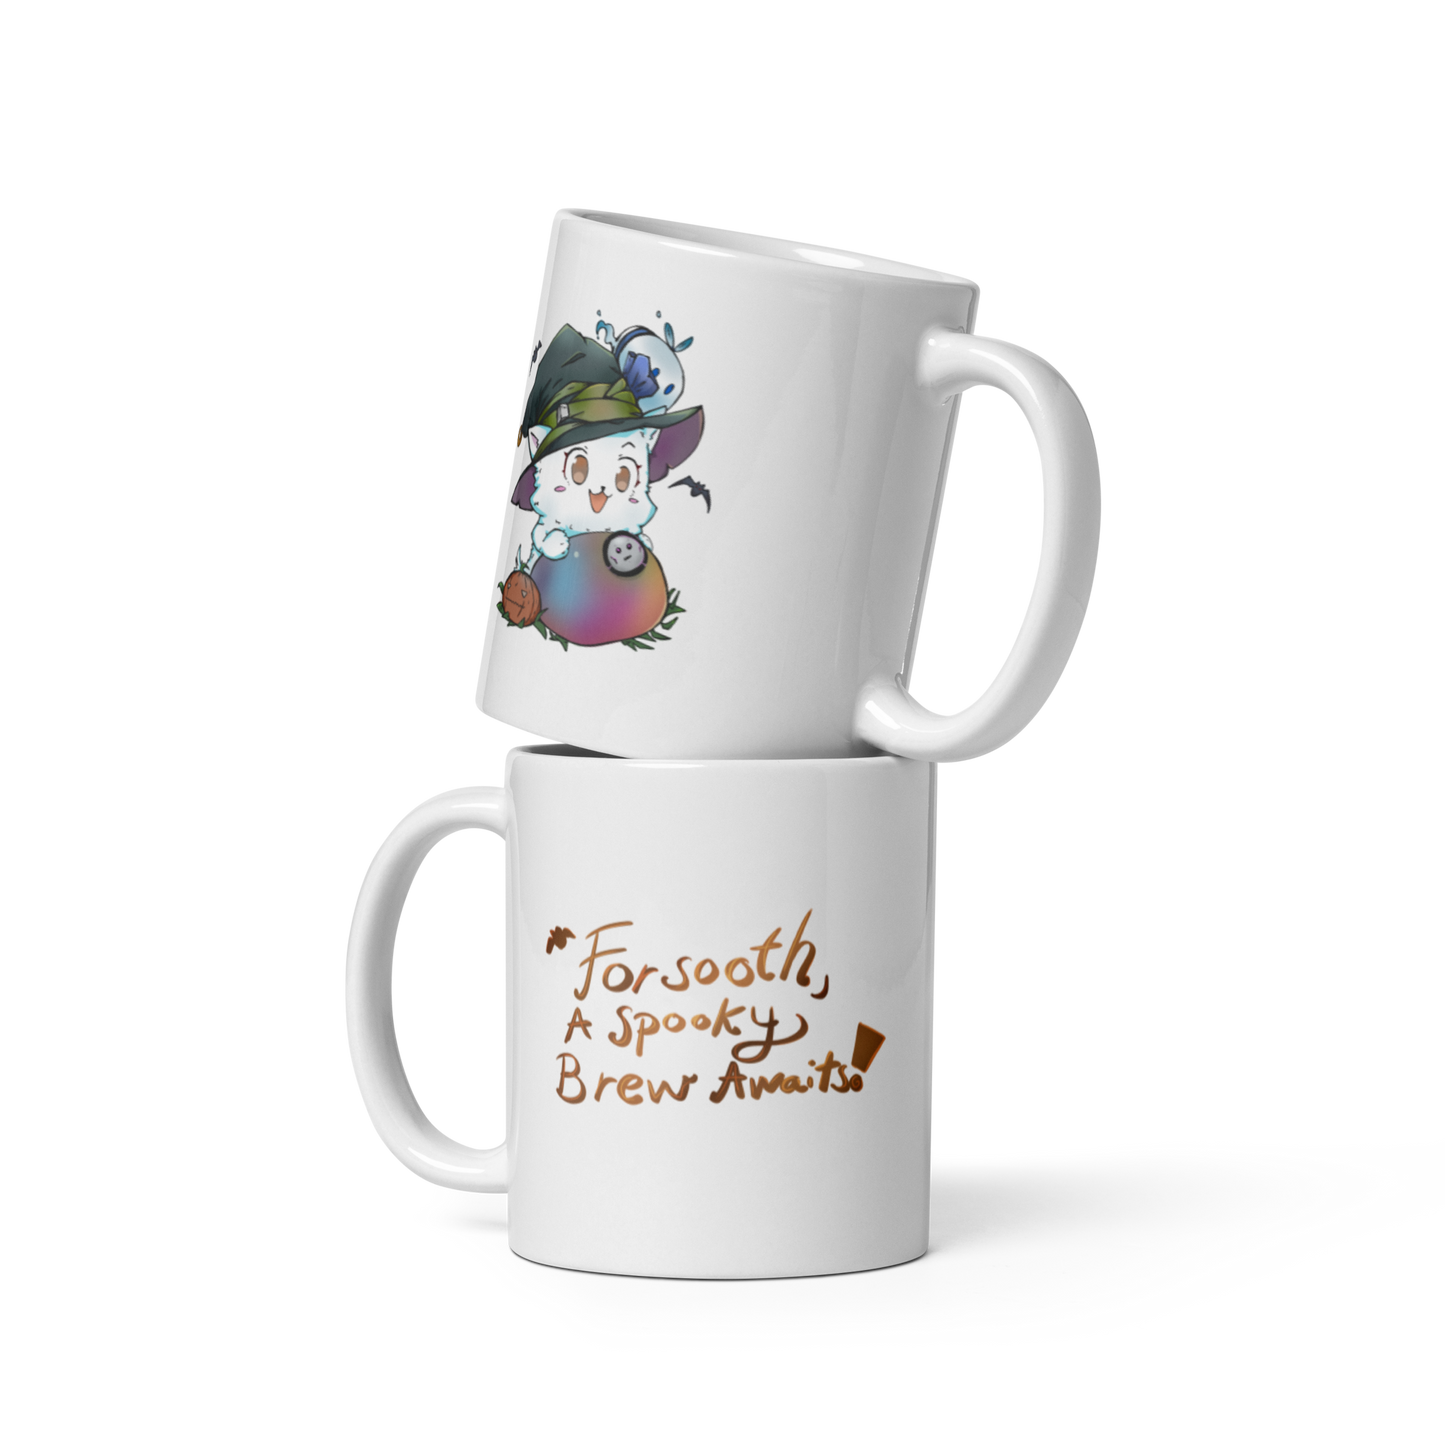 A Spooky Brew Mug